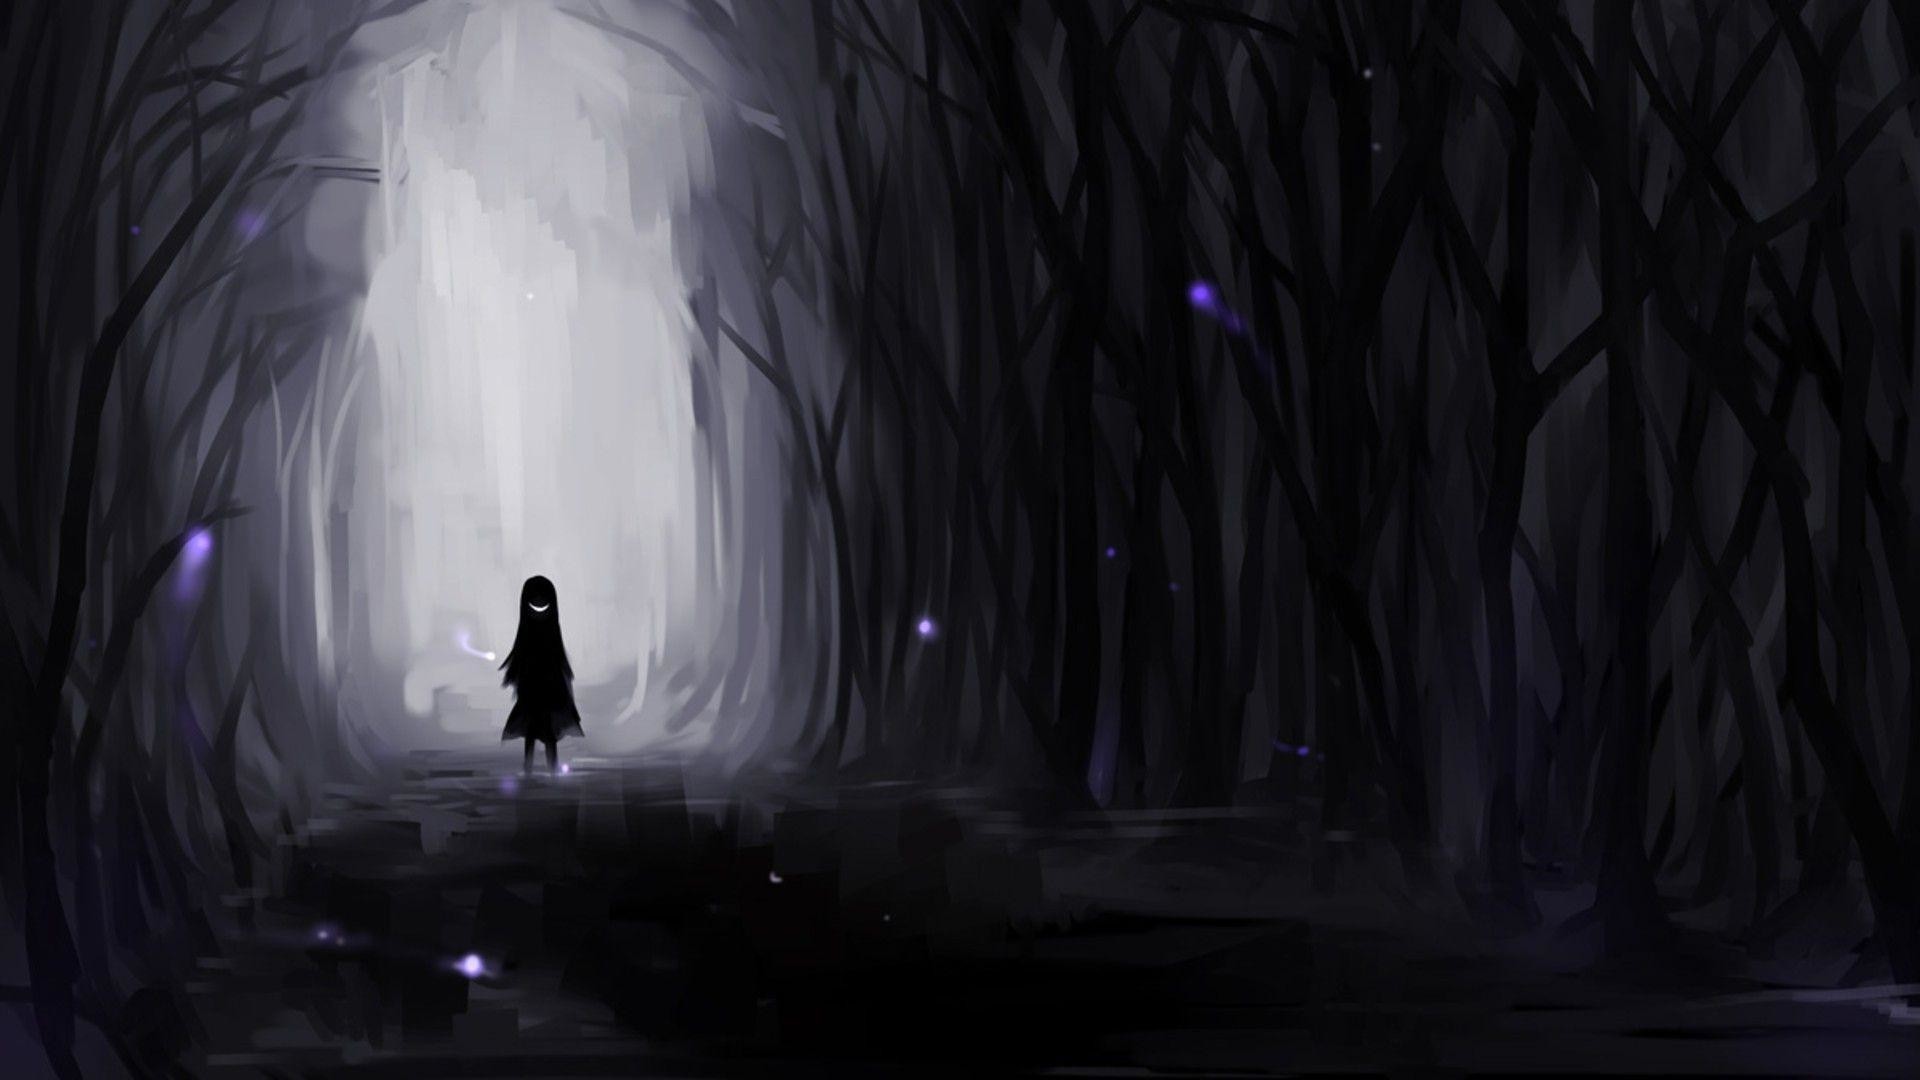 fondos de pantalla de anime hd,oscuridad,negro,ligero,atmósfera,púrpura